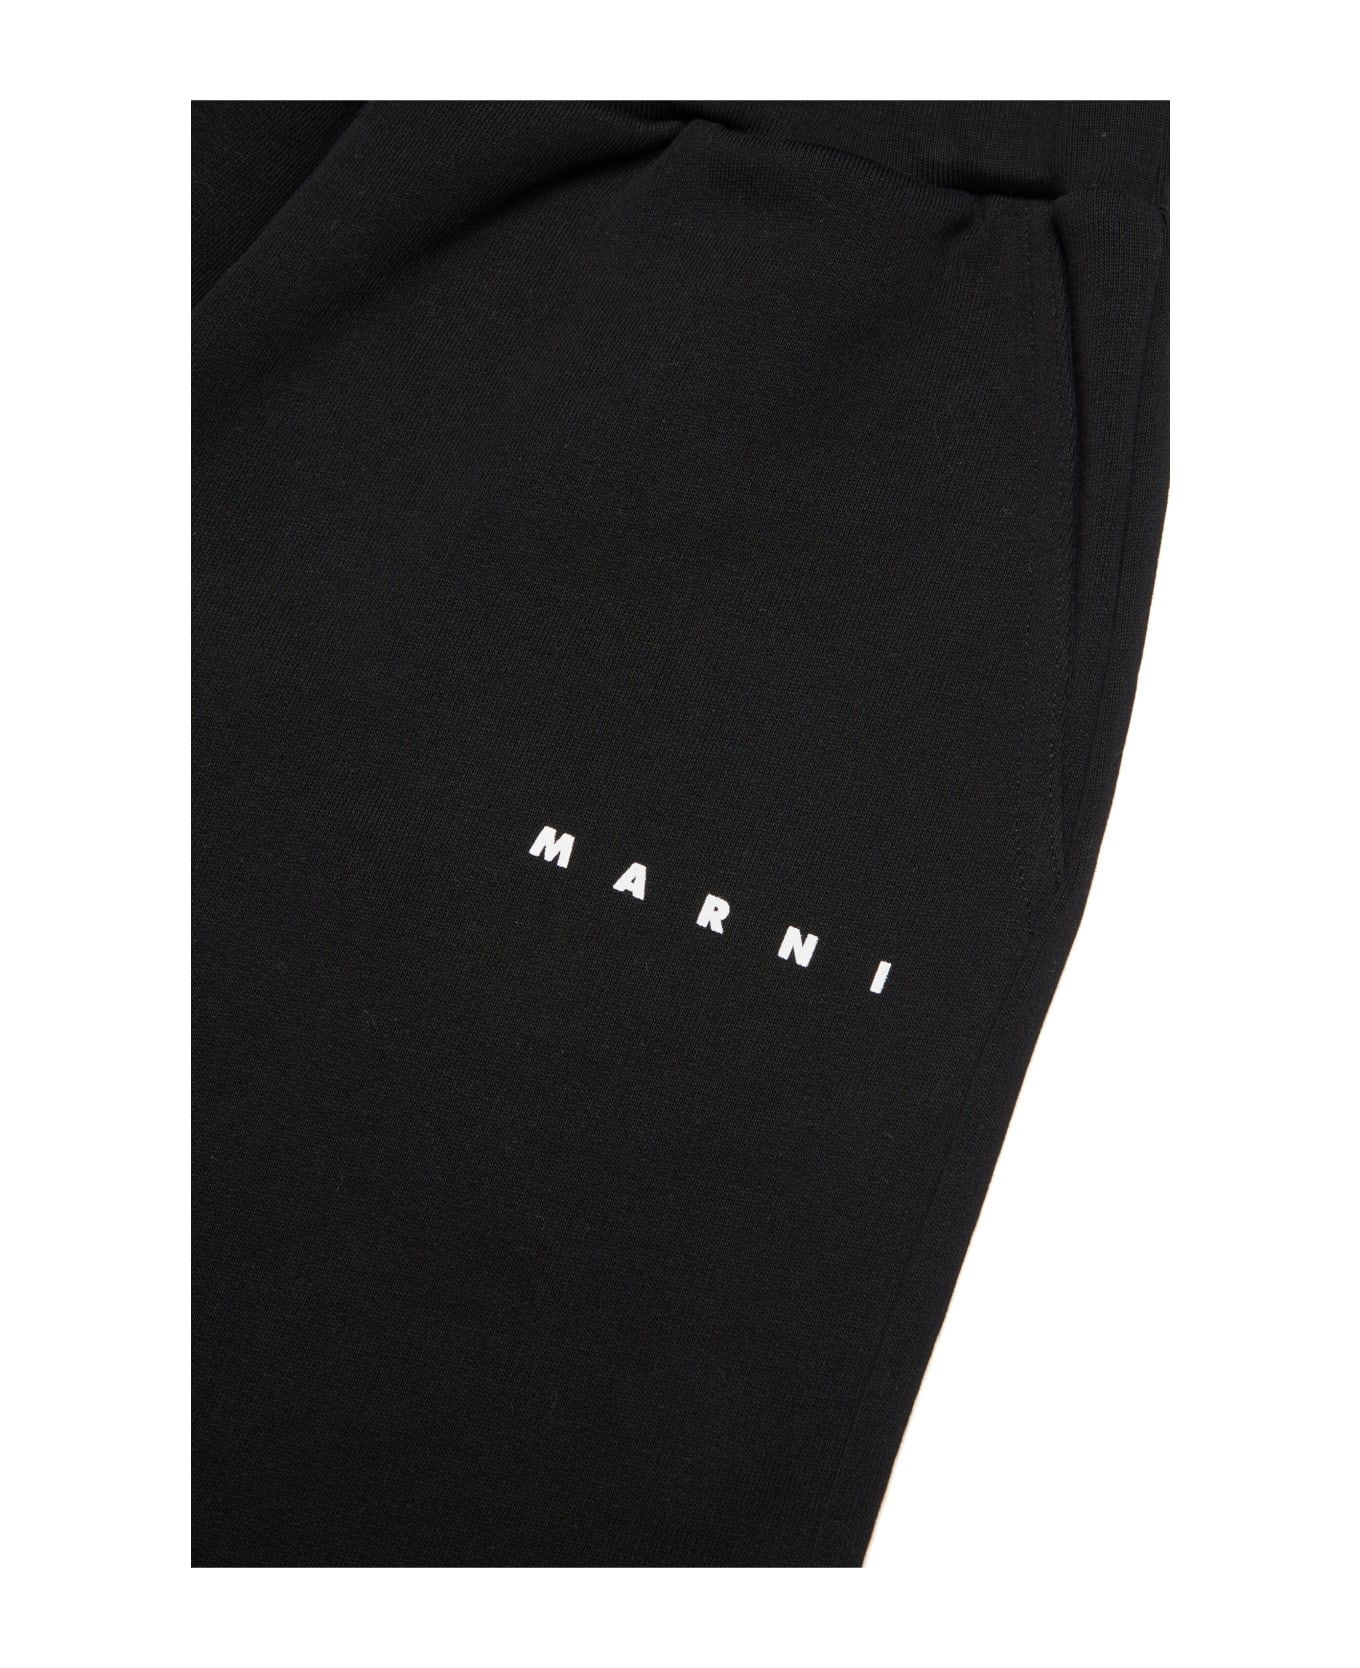 Marni Mp66u Shorts Marni Branded Fleece Shorts - Black